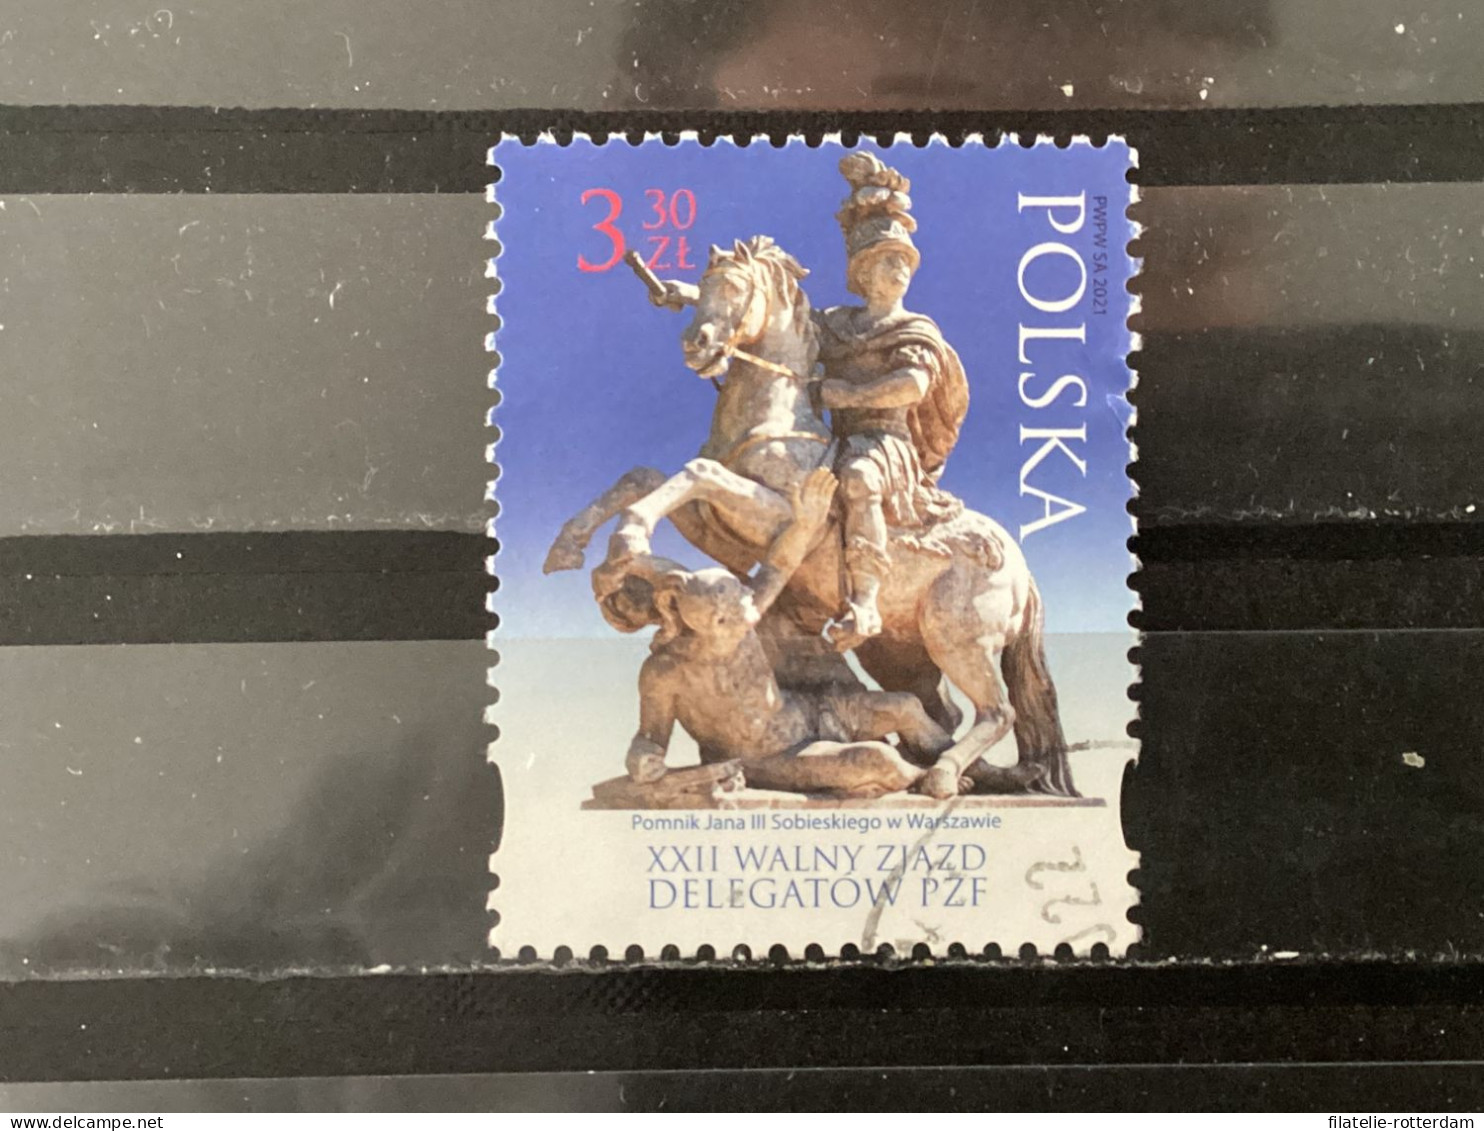 Polen / Poland - Standbeelden (3.30) 2021 - Used Stamps